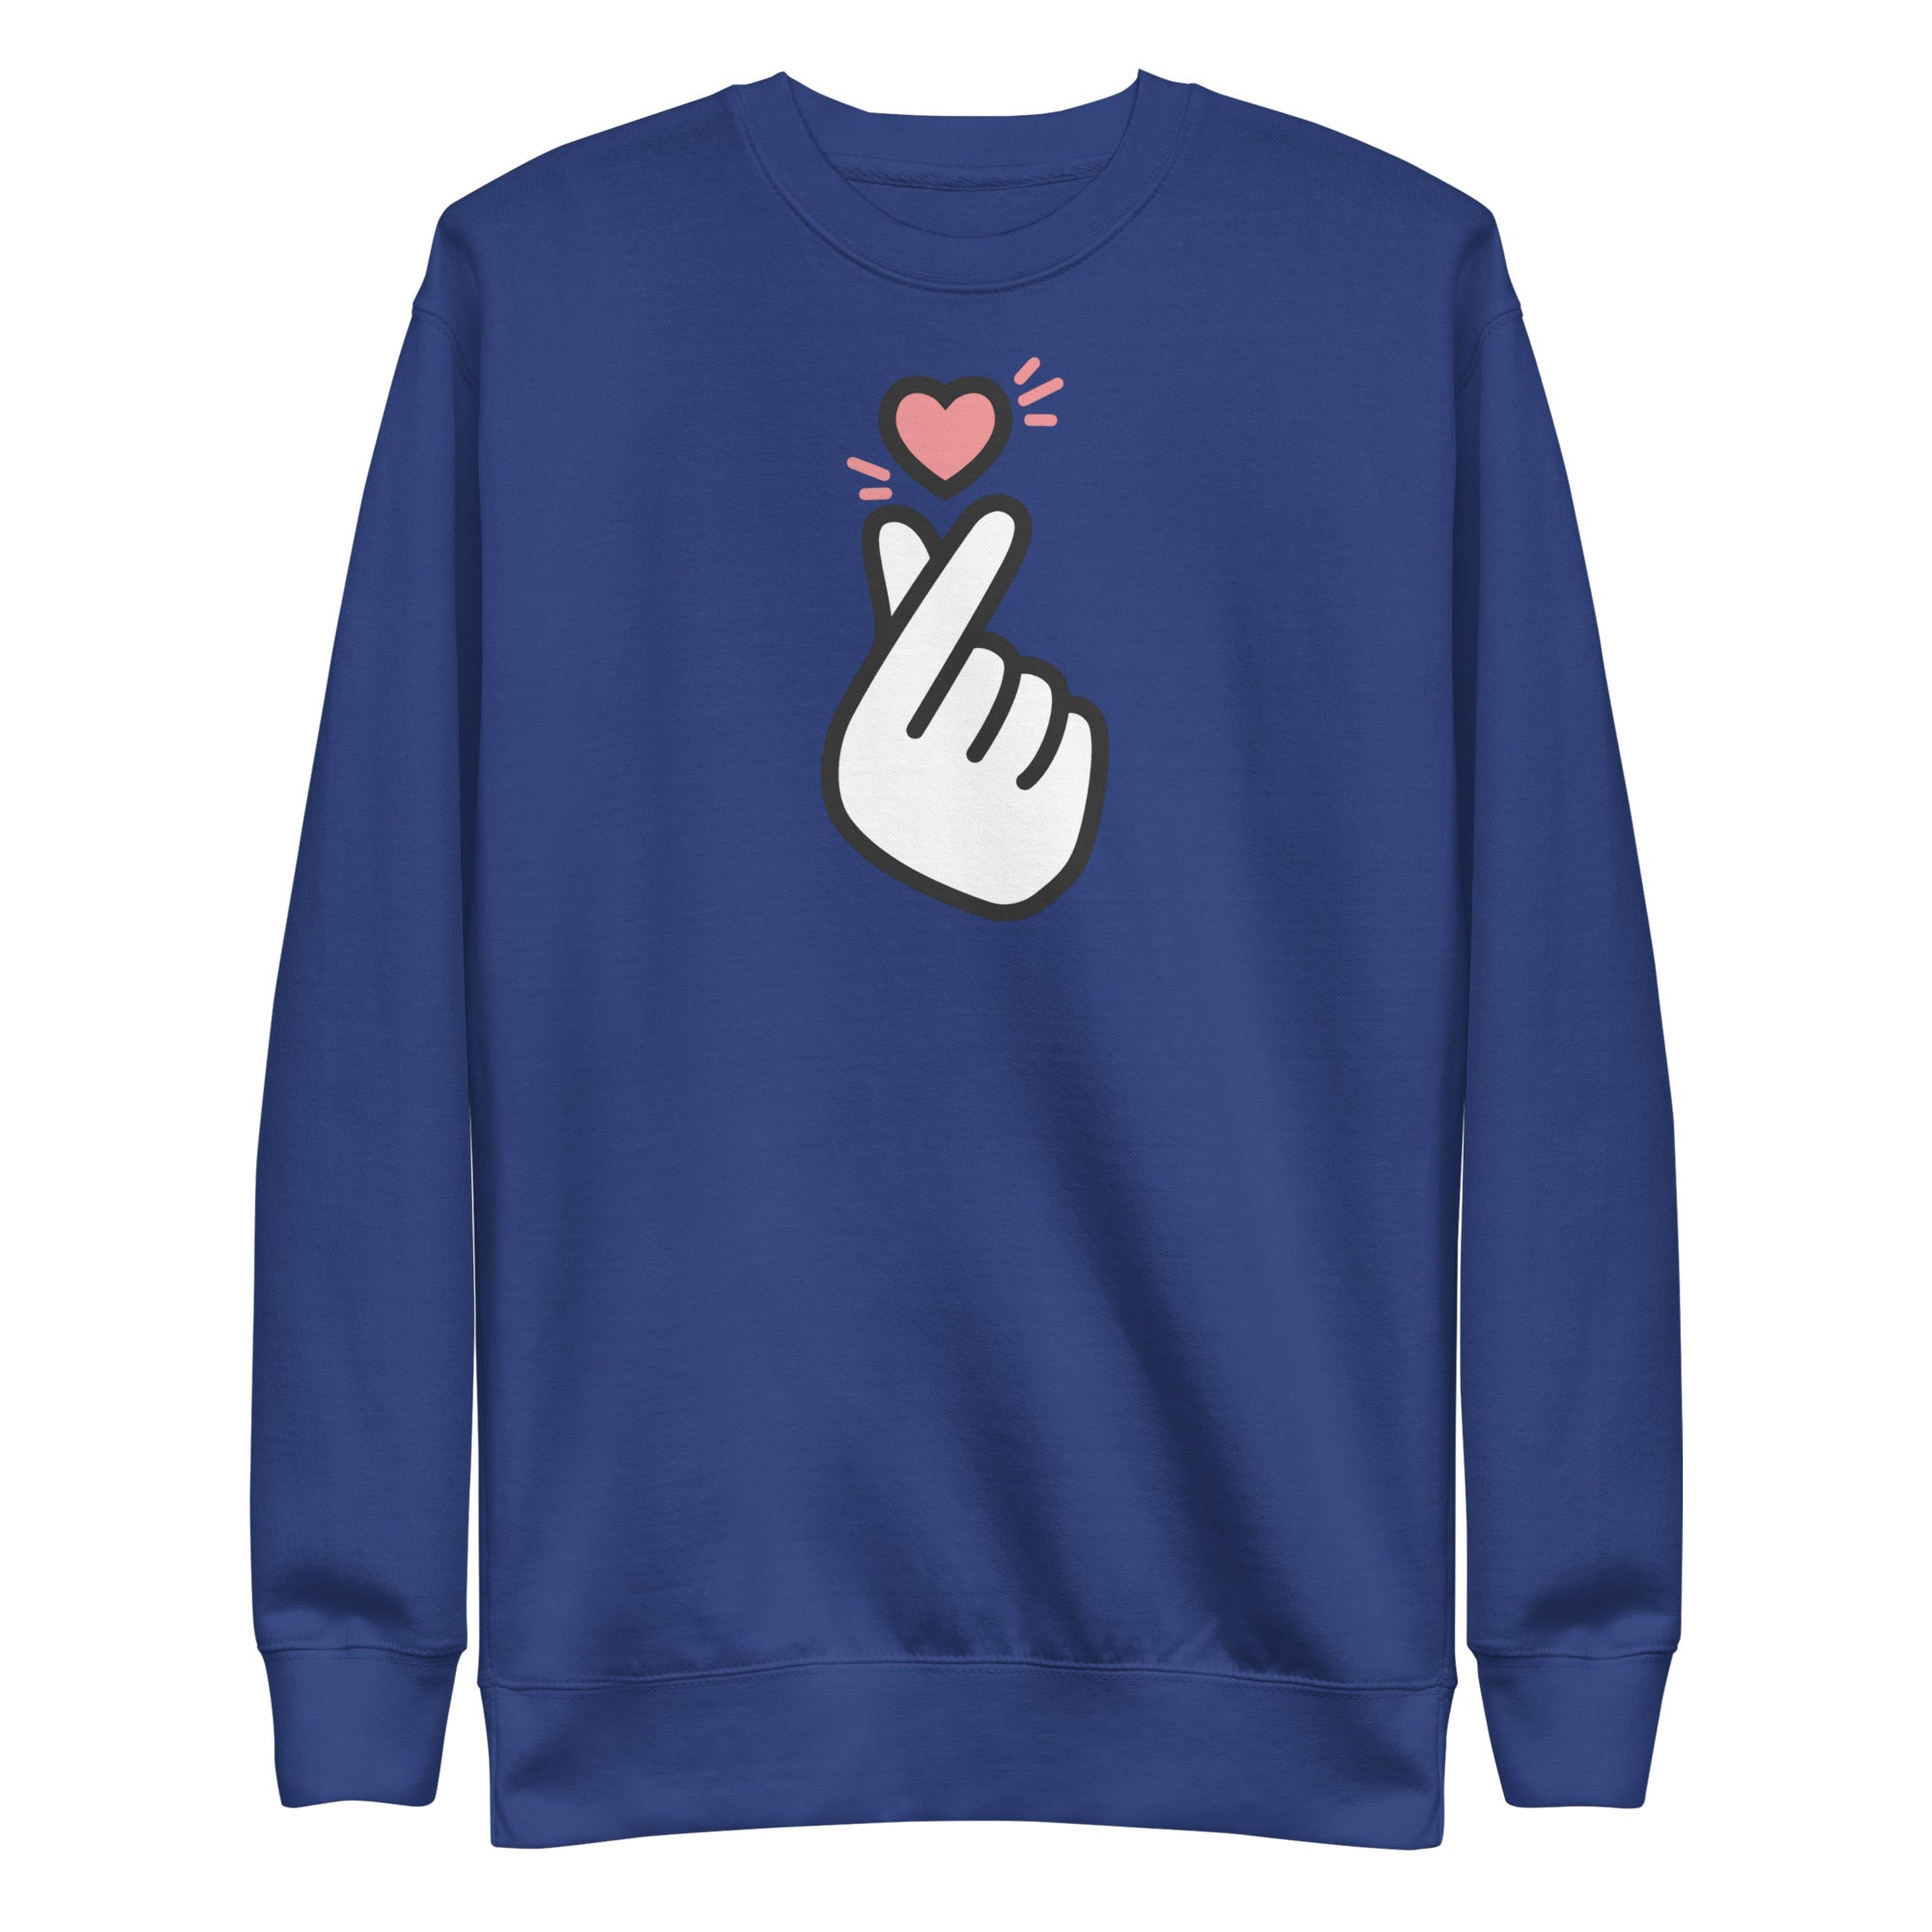 I Heart You Unisex Premium Sweatshirt